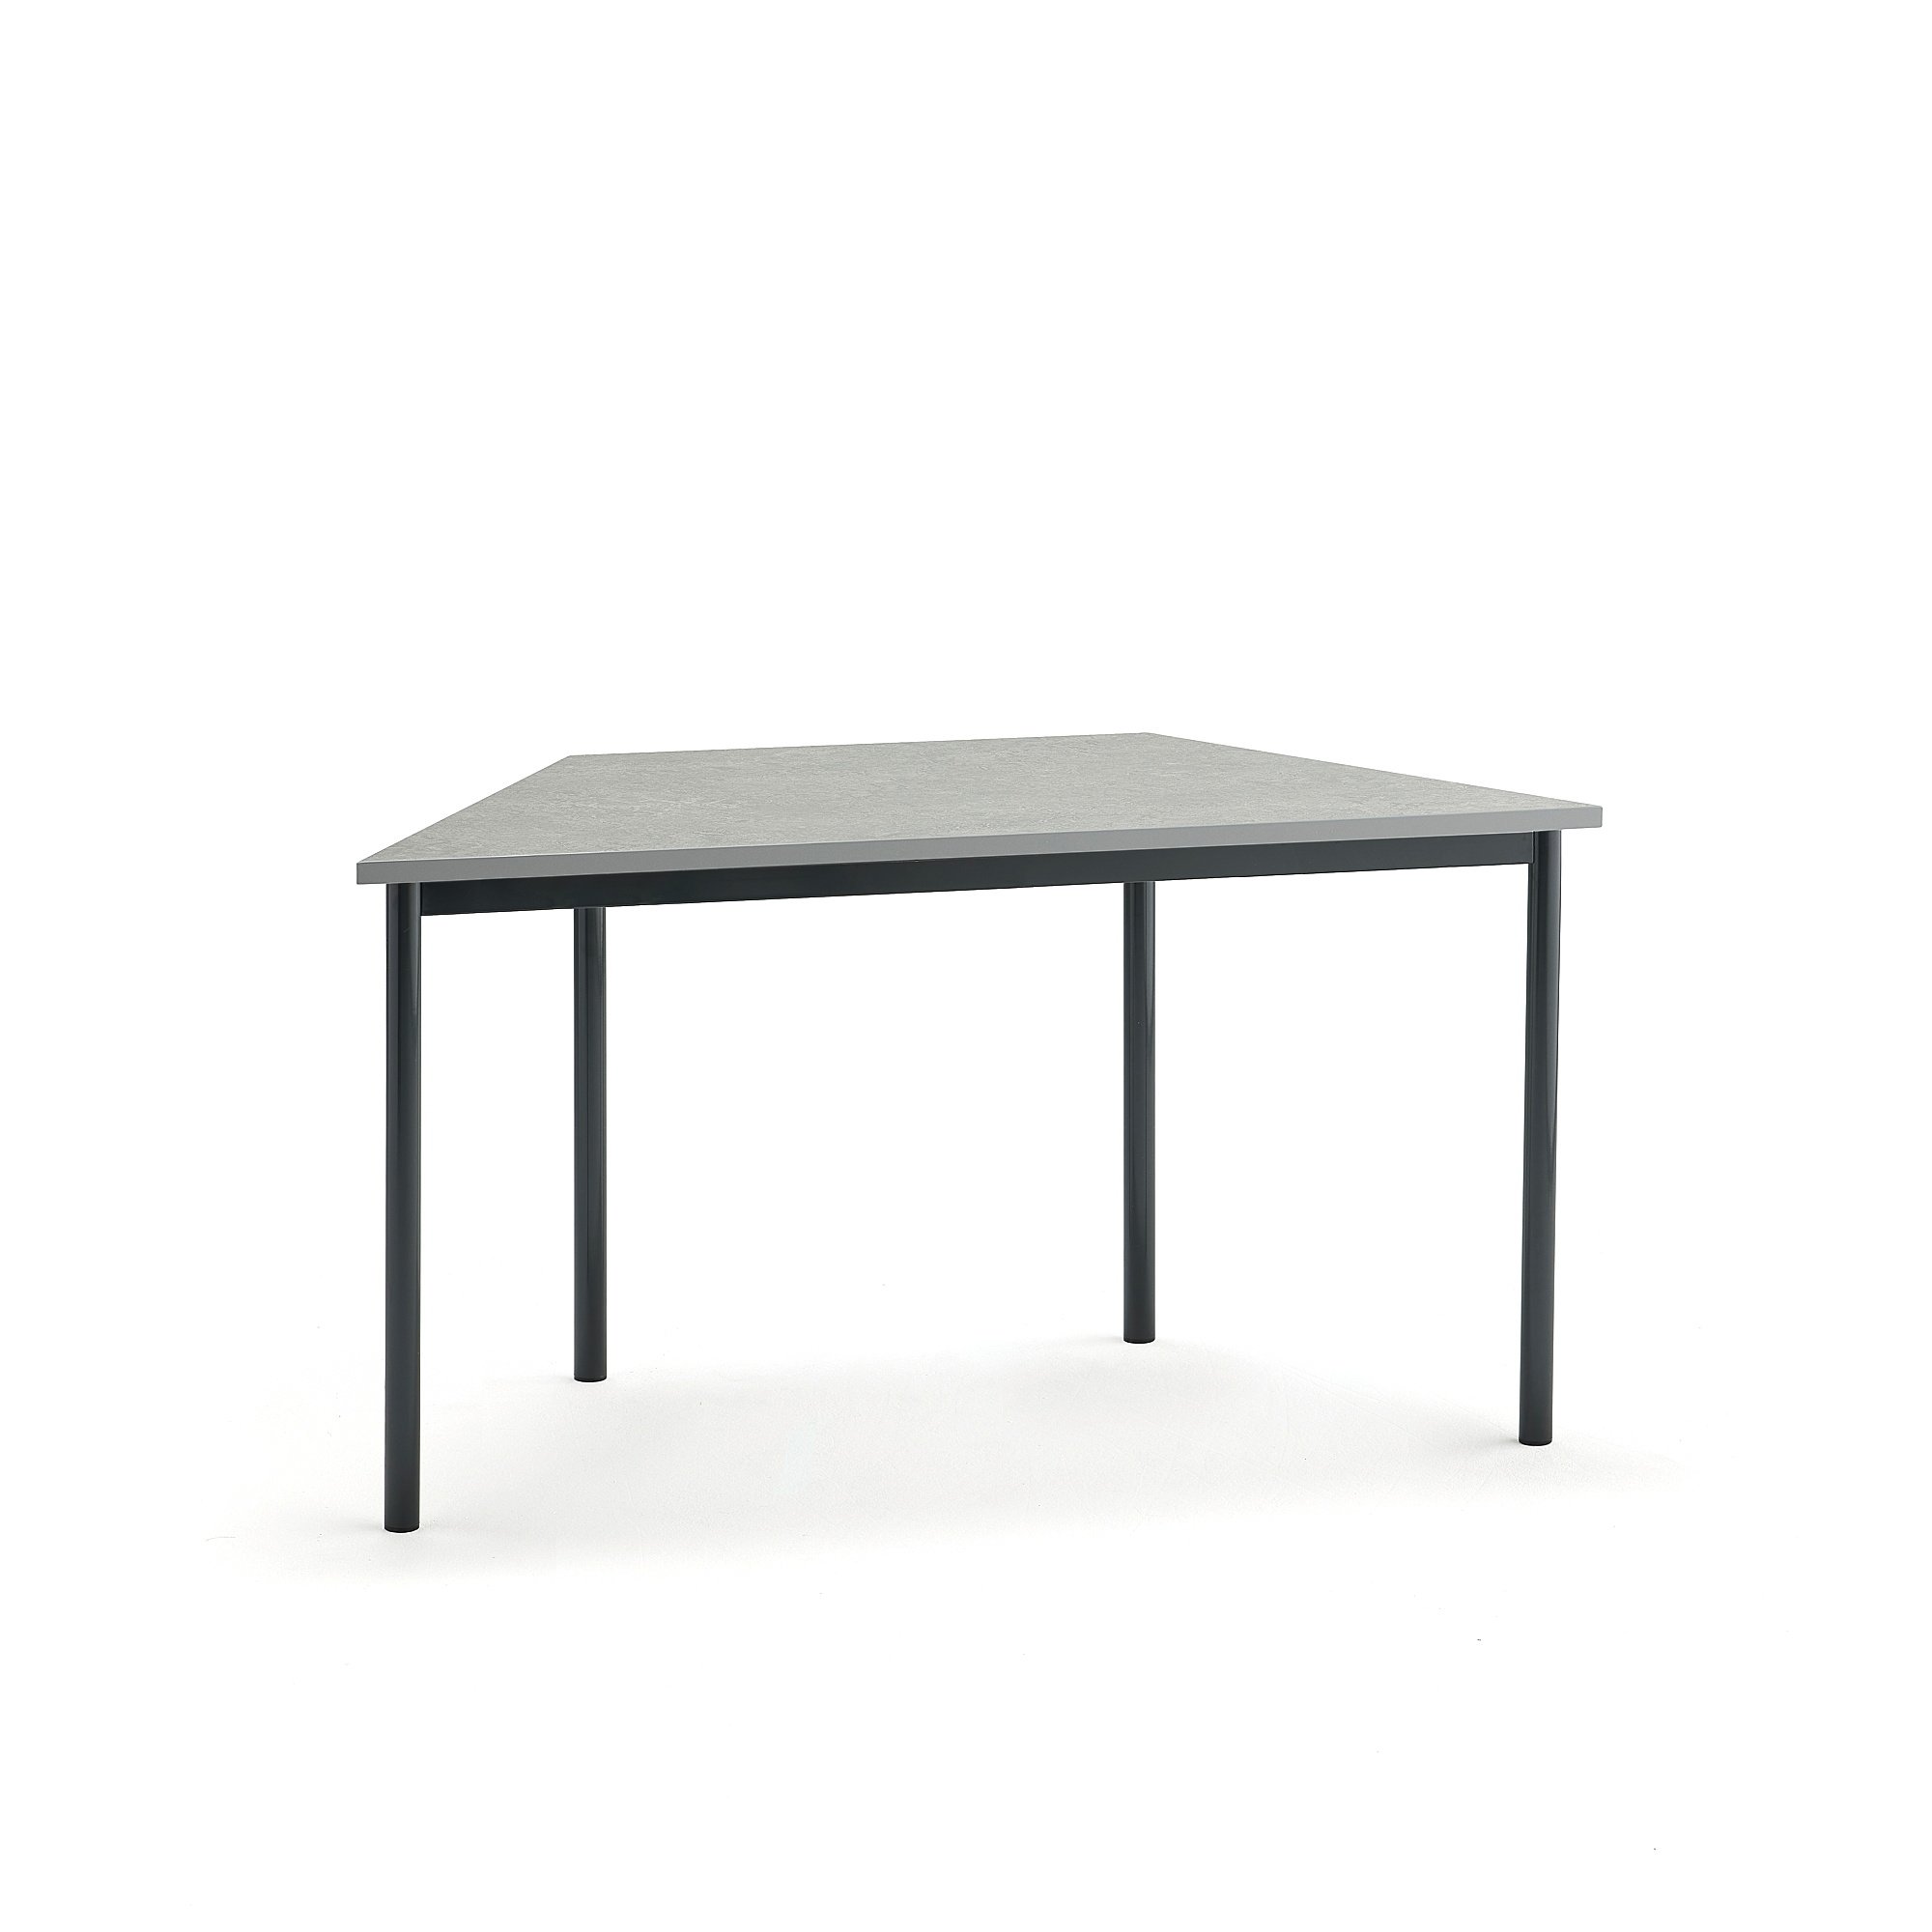 Stůl SONITUS TRAPETS, 1400x700x720 mm, antracitově šedé nohy, deska s linoleem, šedá